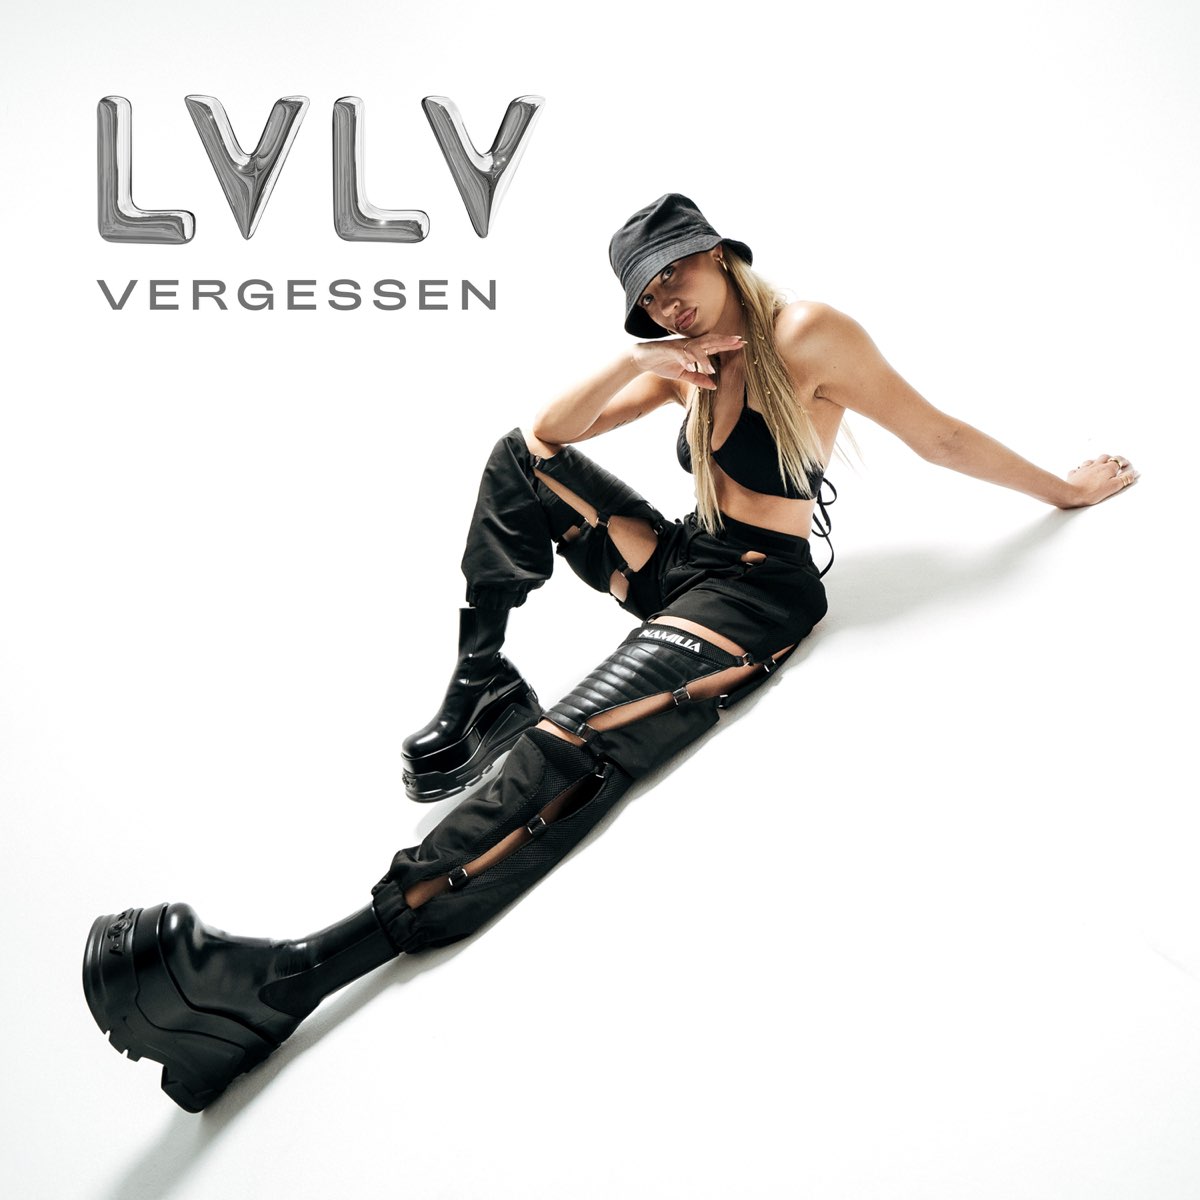 LVLV — Vergessen cover artwork